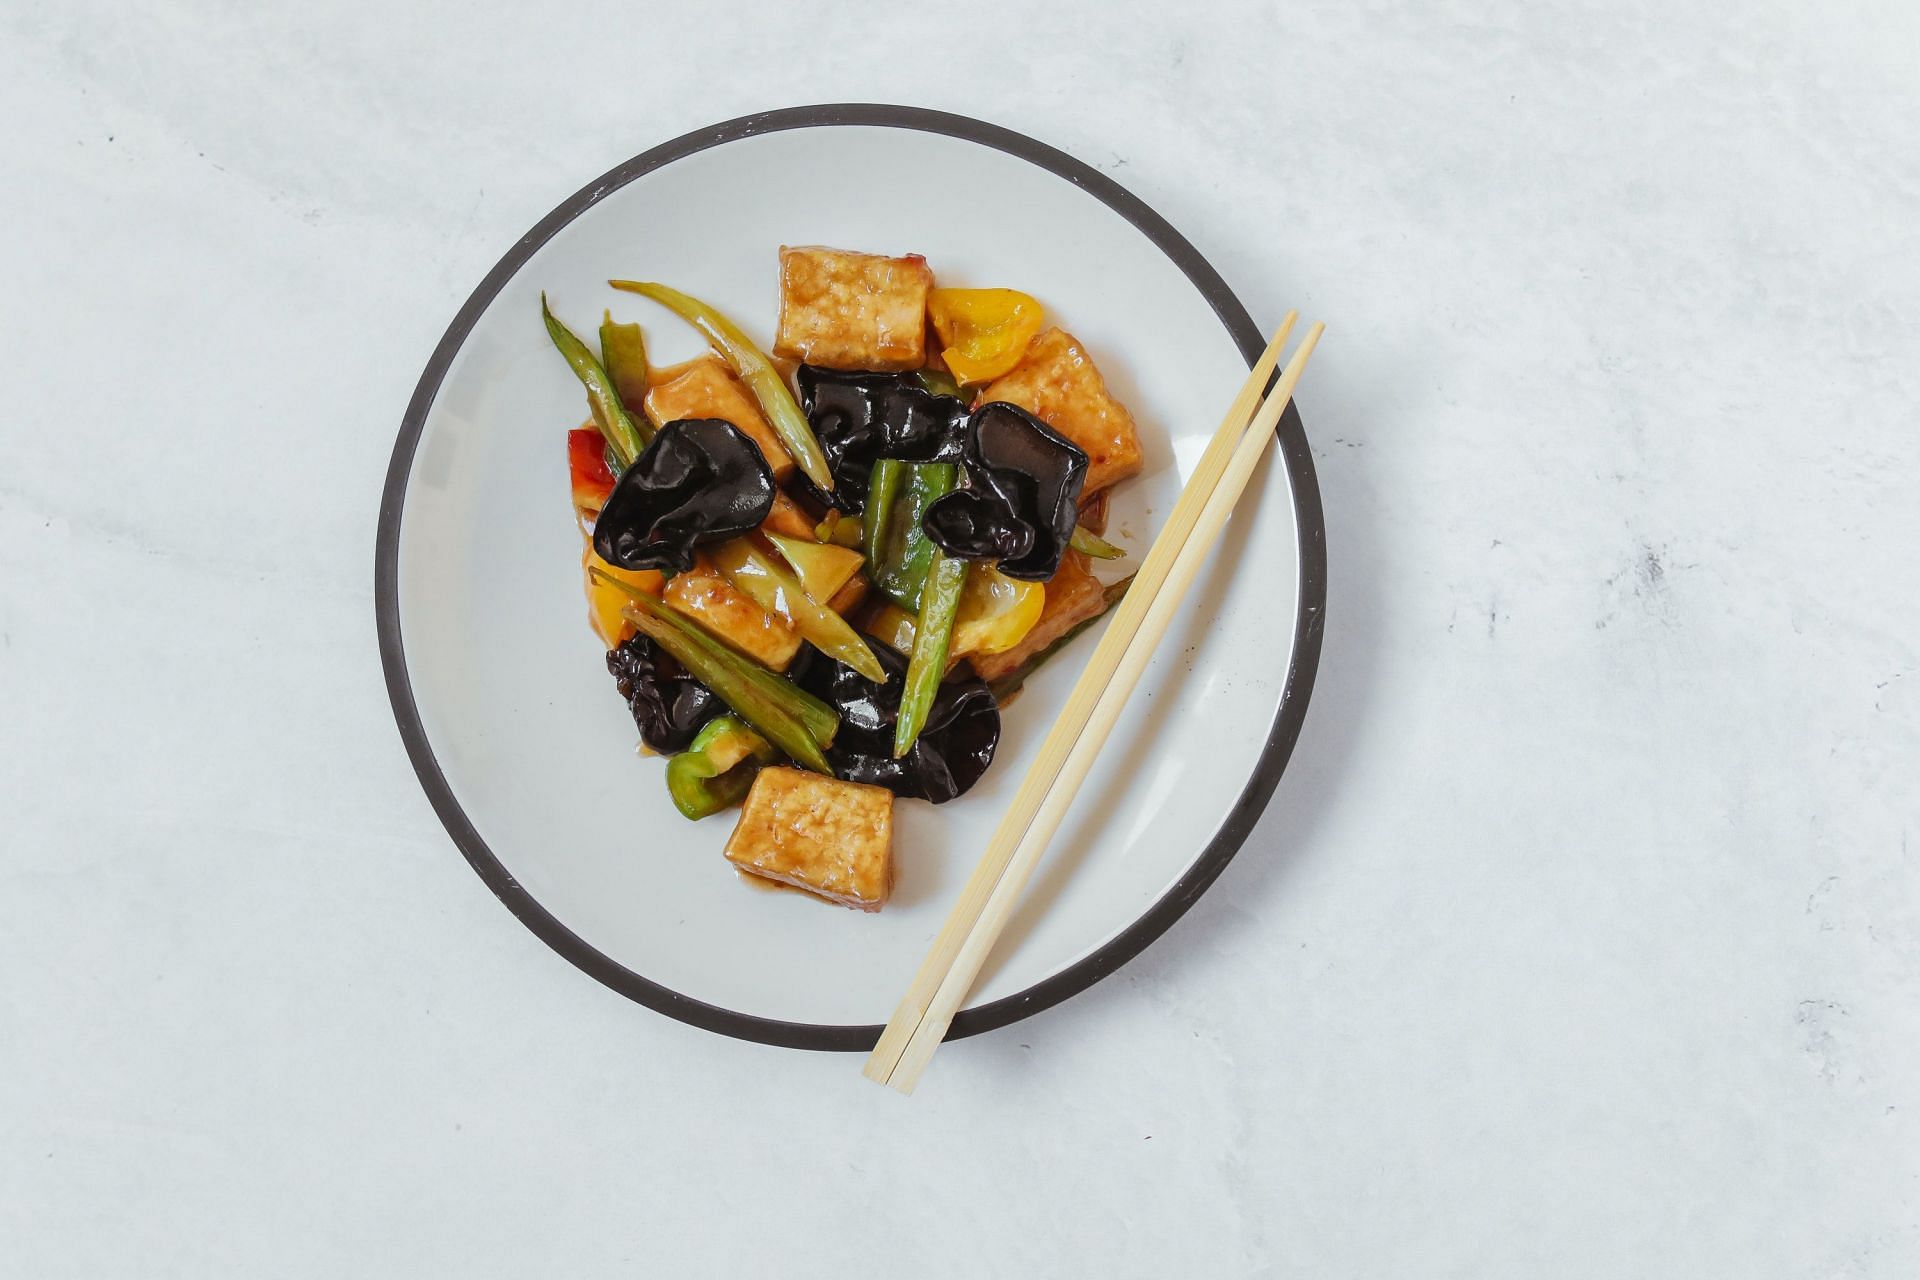  Stir fry tofu (Image via Pexels/PolinaTankilevitch)